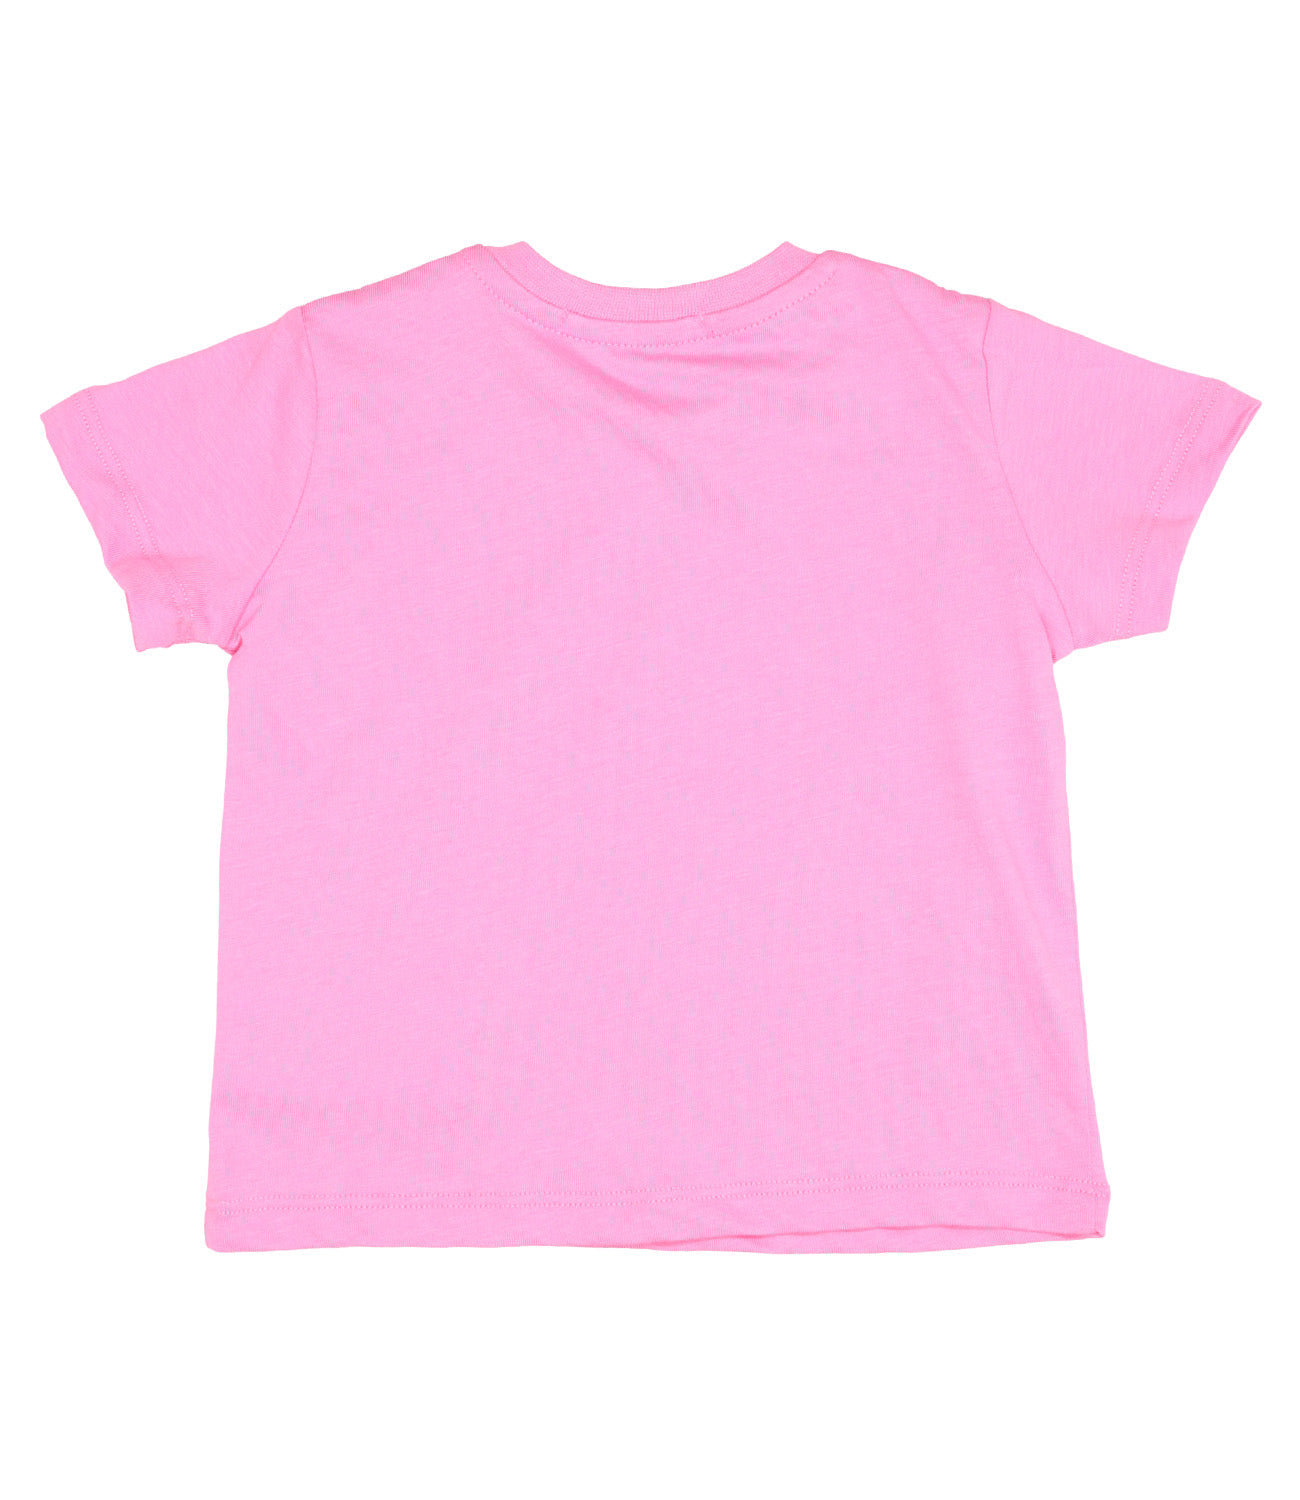 T-Shirt Rosa